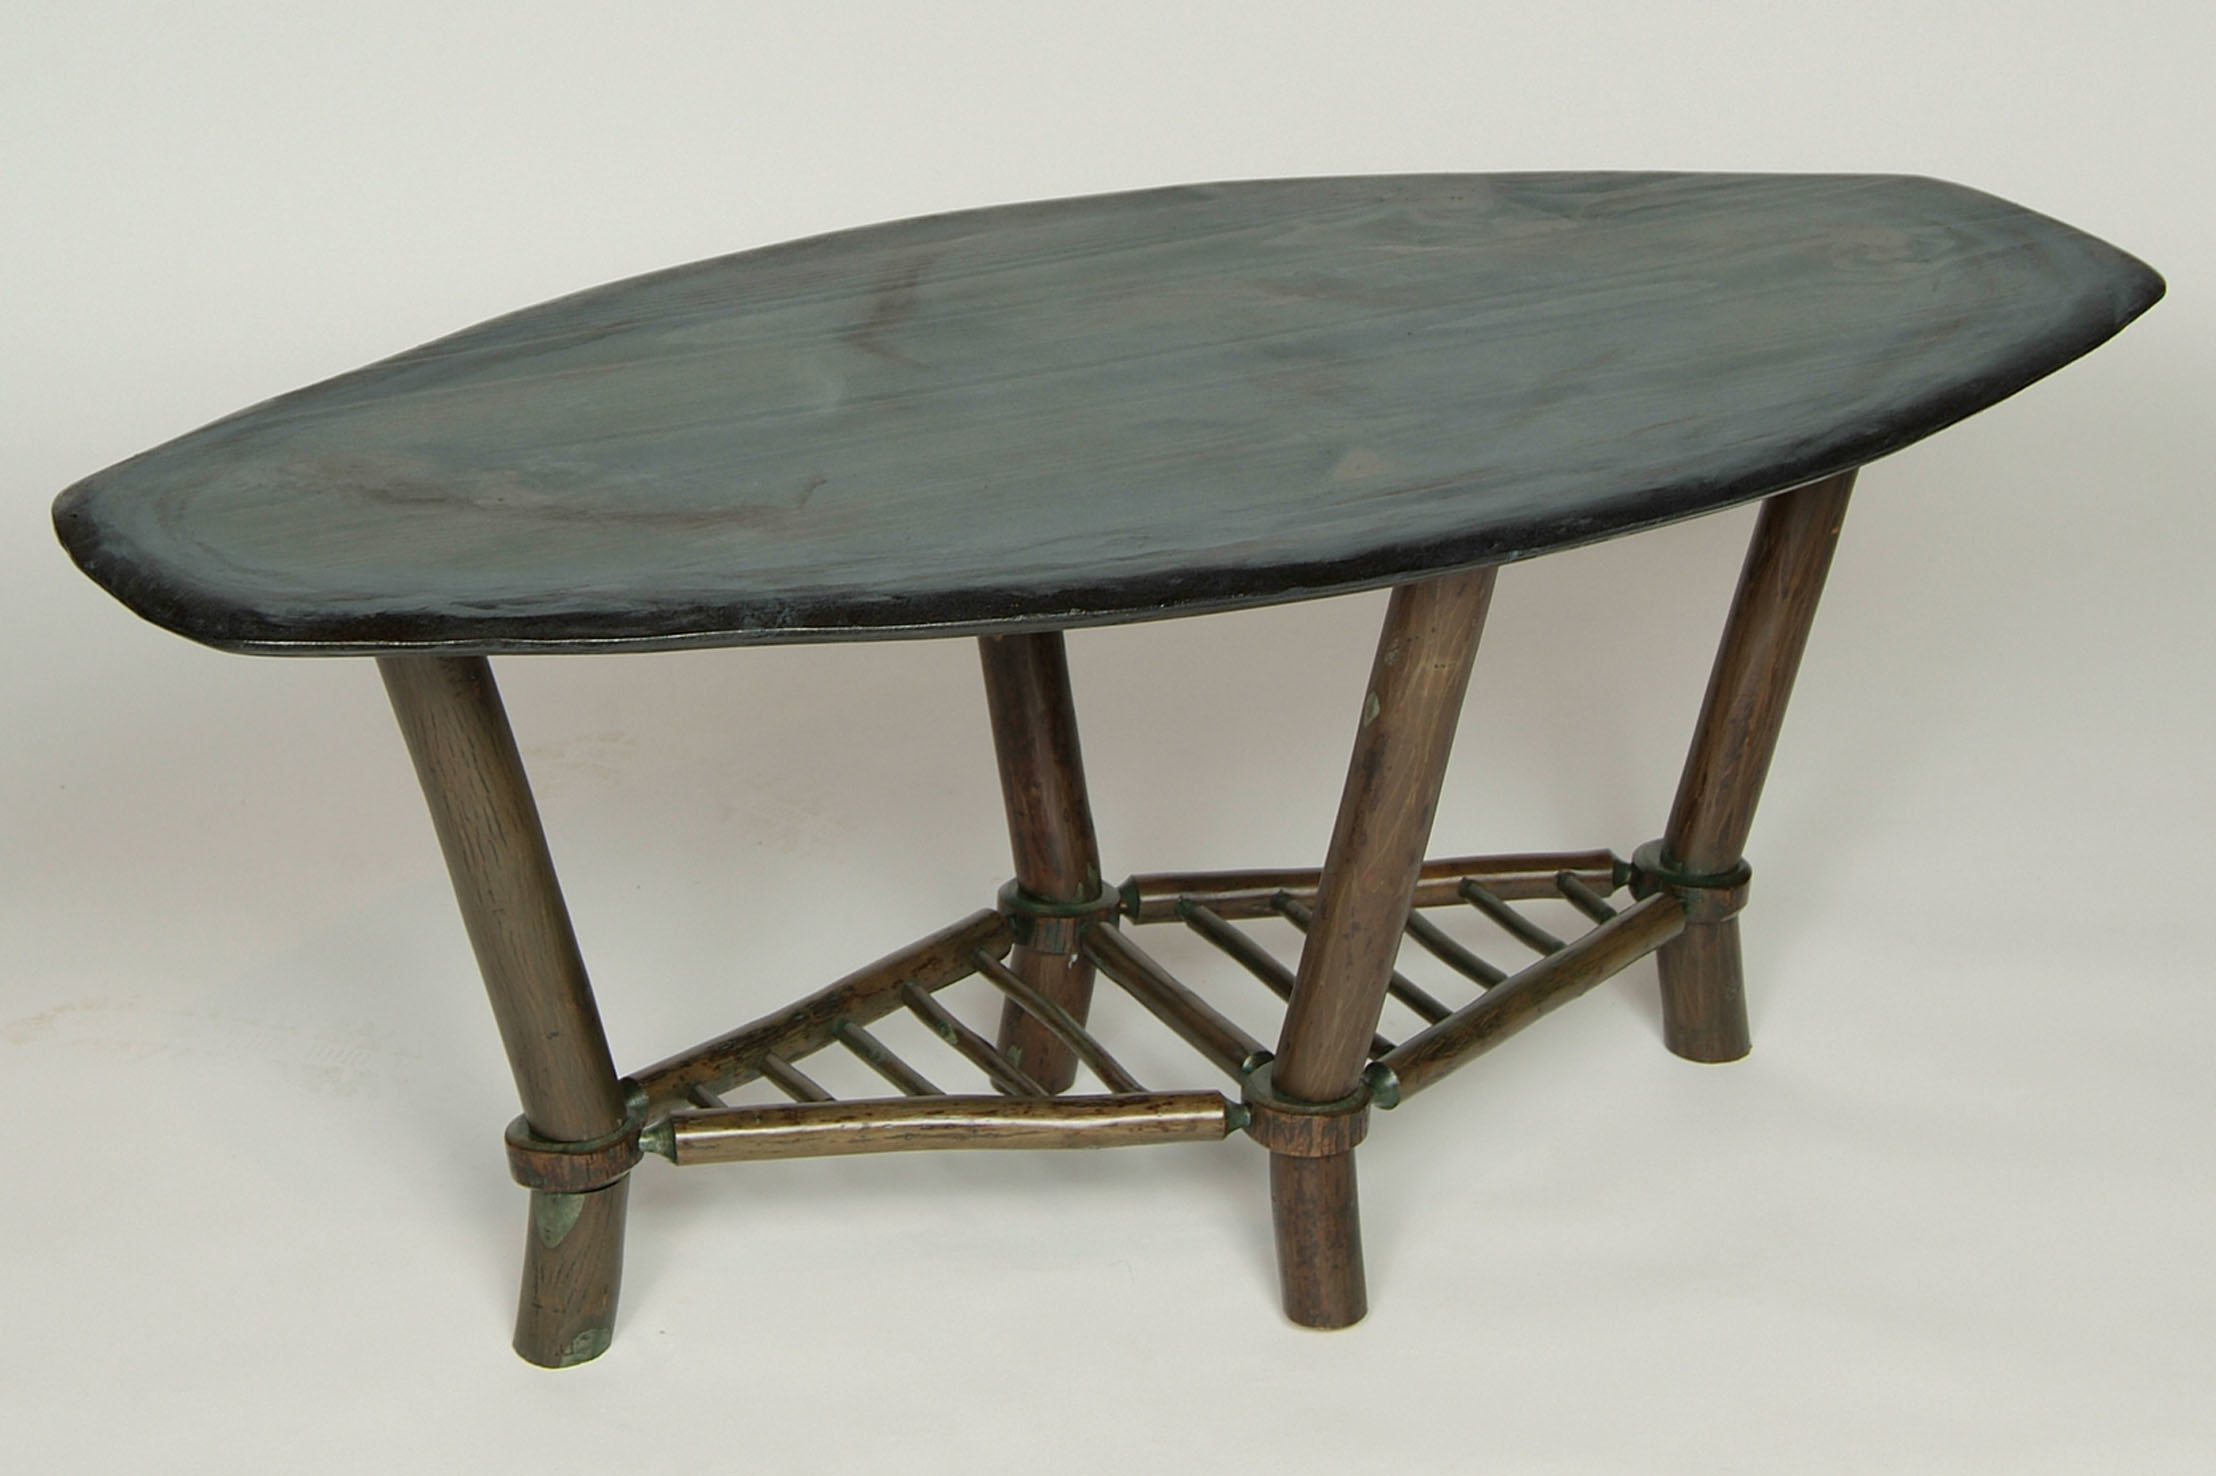 Flat Rock Furniture Table Rock Coffee Table Wayfair throughout measurements 2216 X 1476